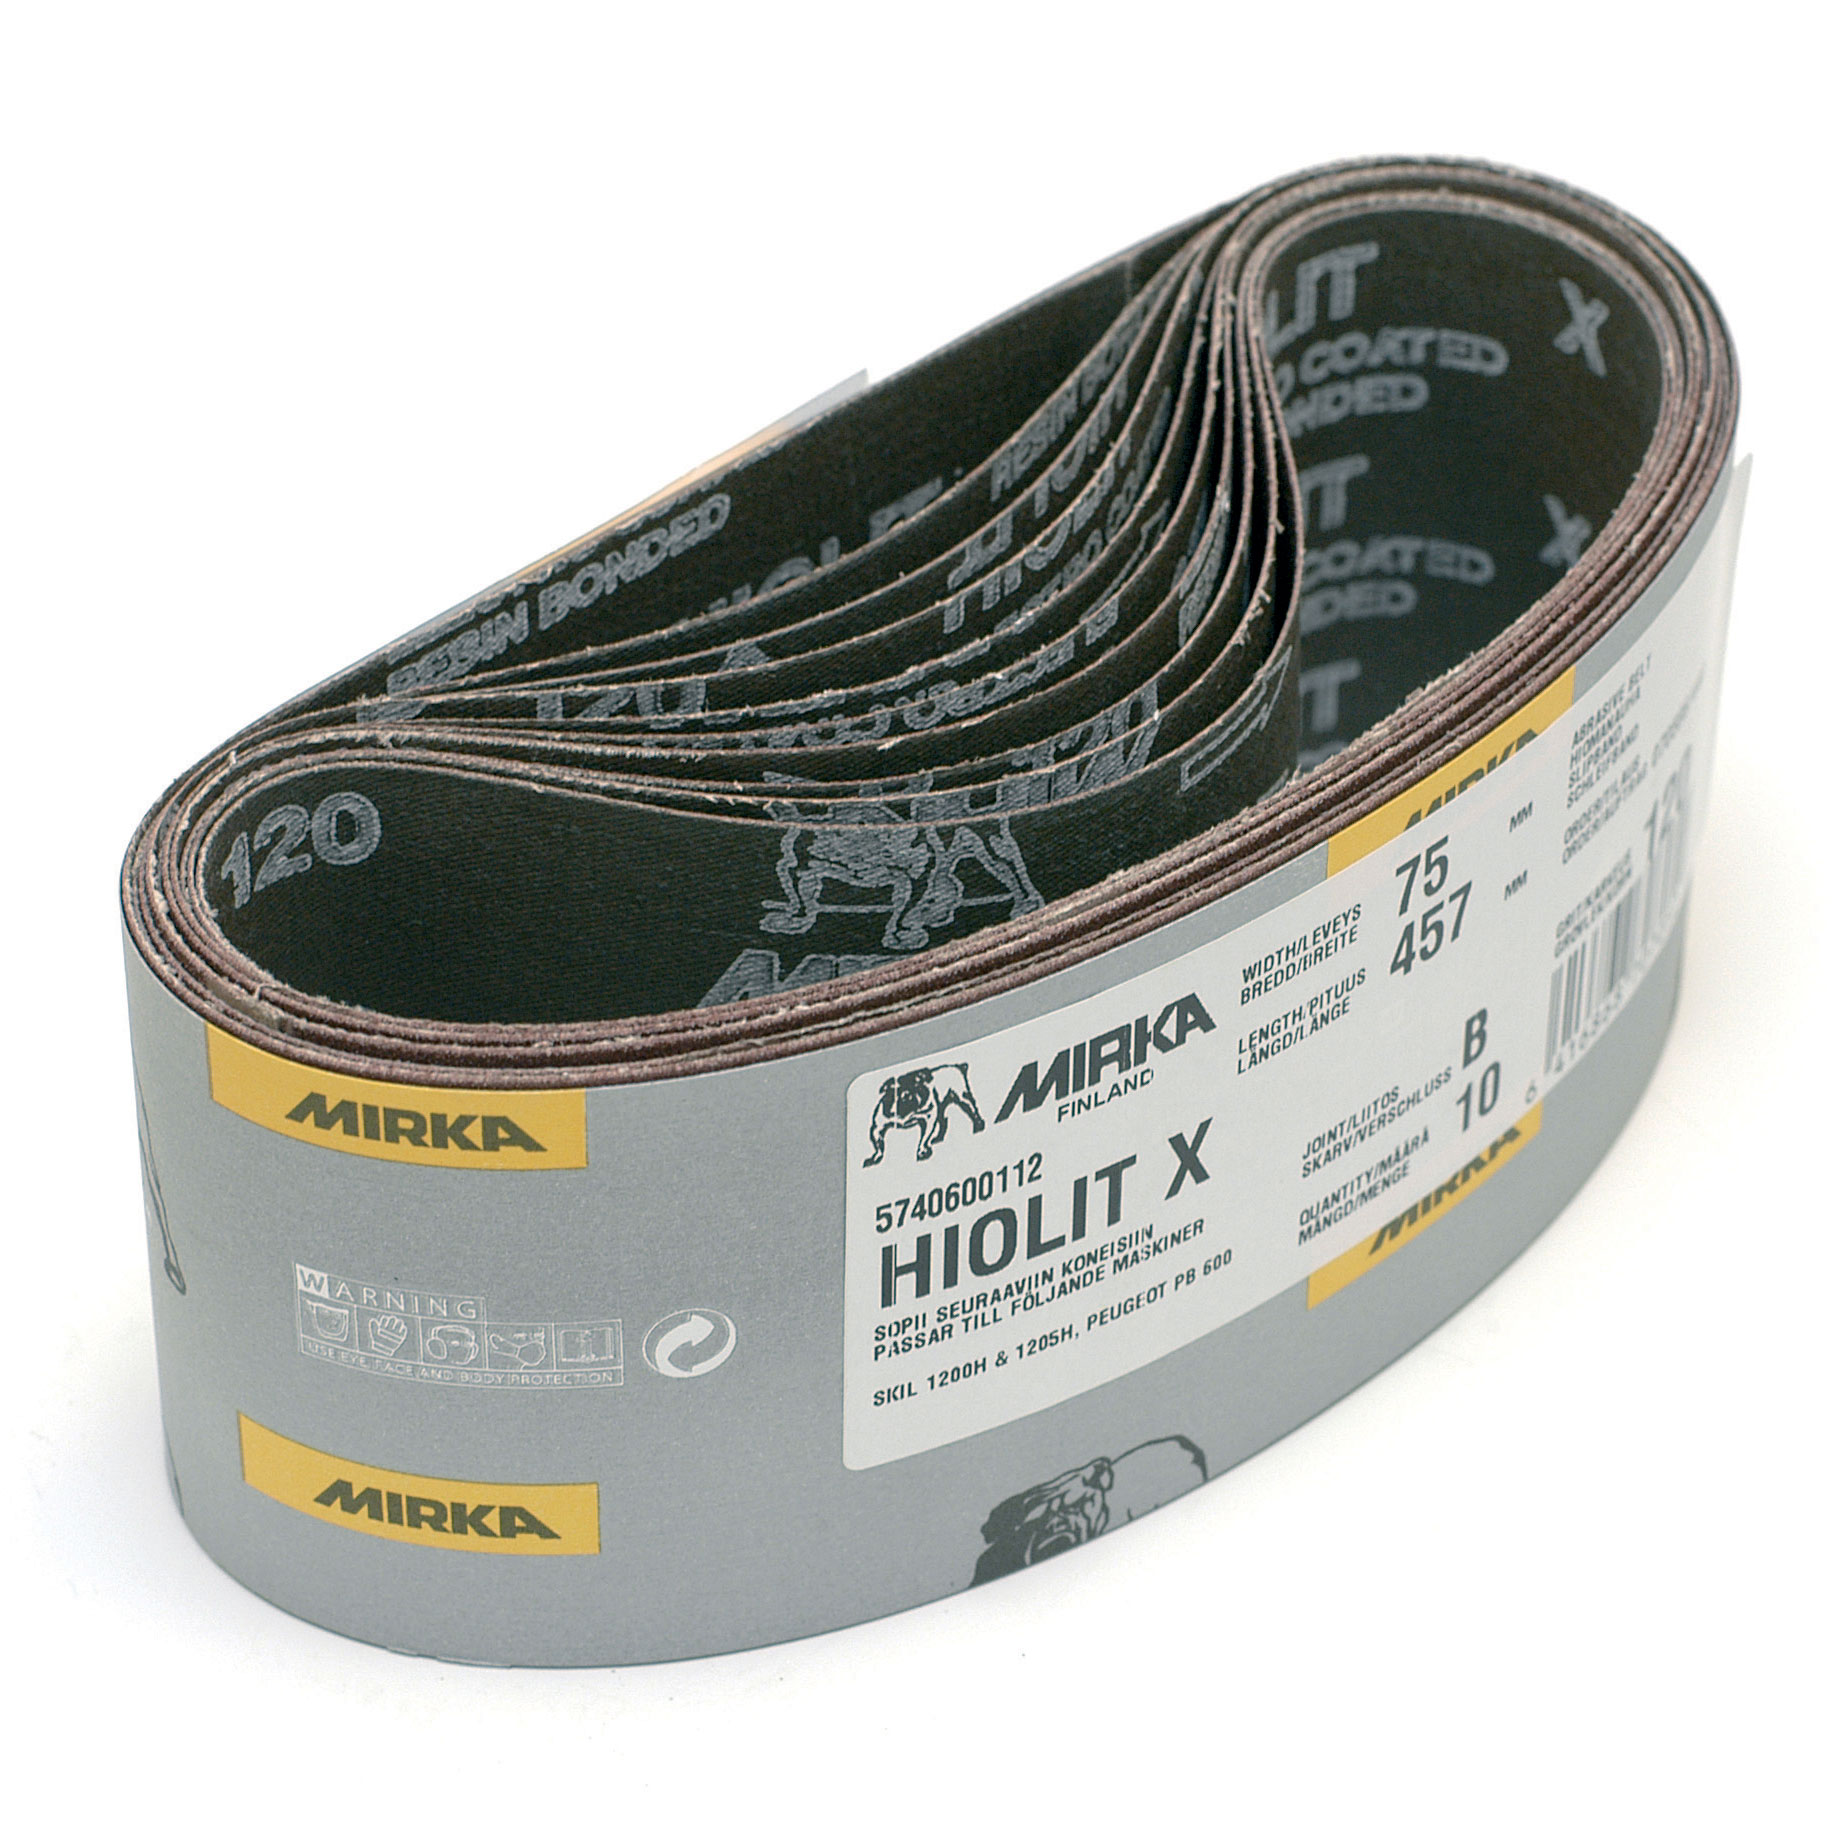 Hiolit Xo Portable Abrasive Belt (tape Joint), 120 Grit, 10 Belts/box